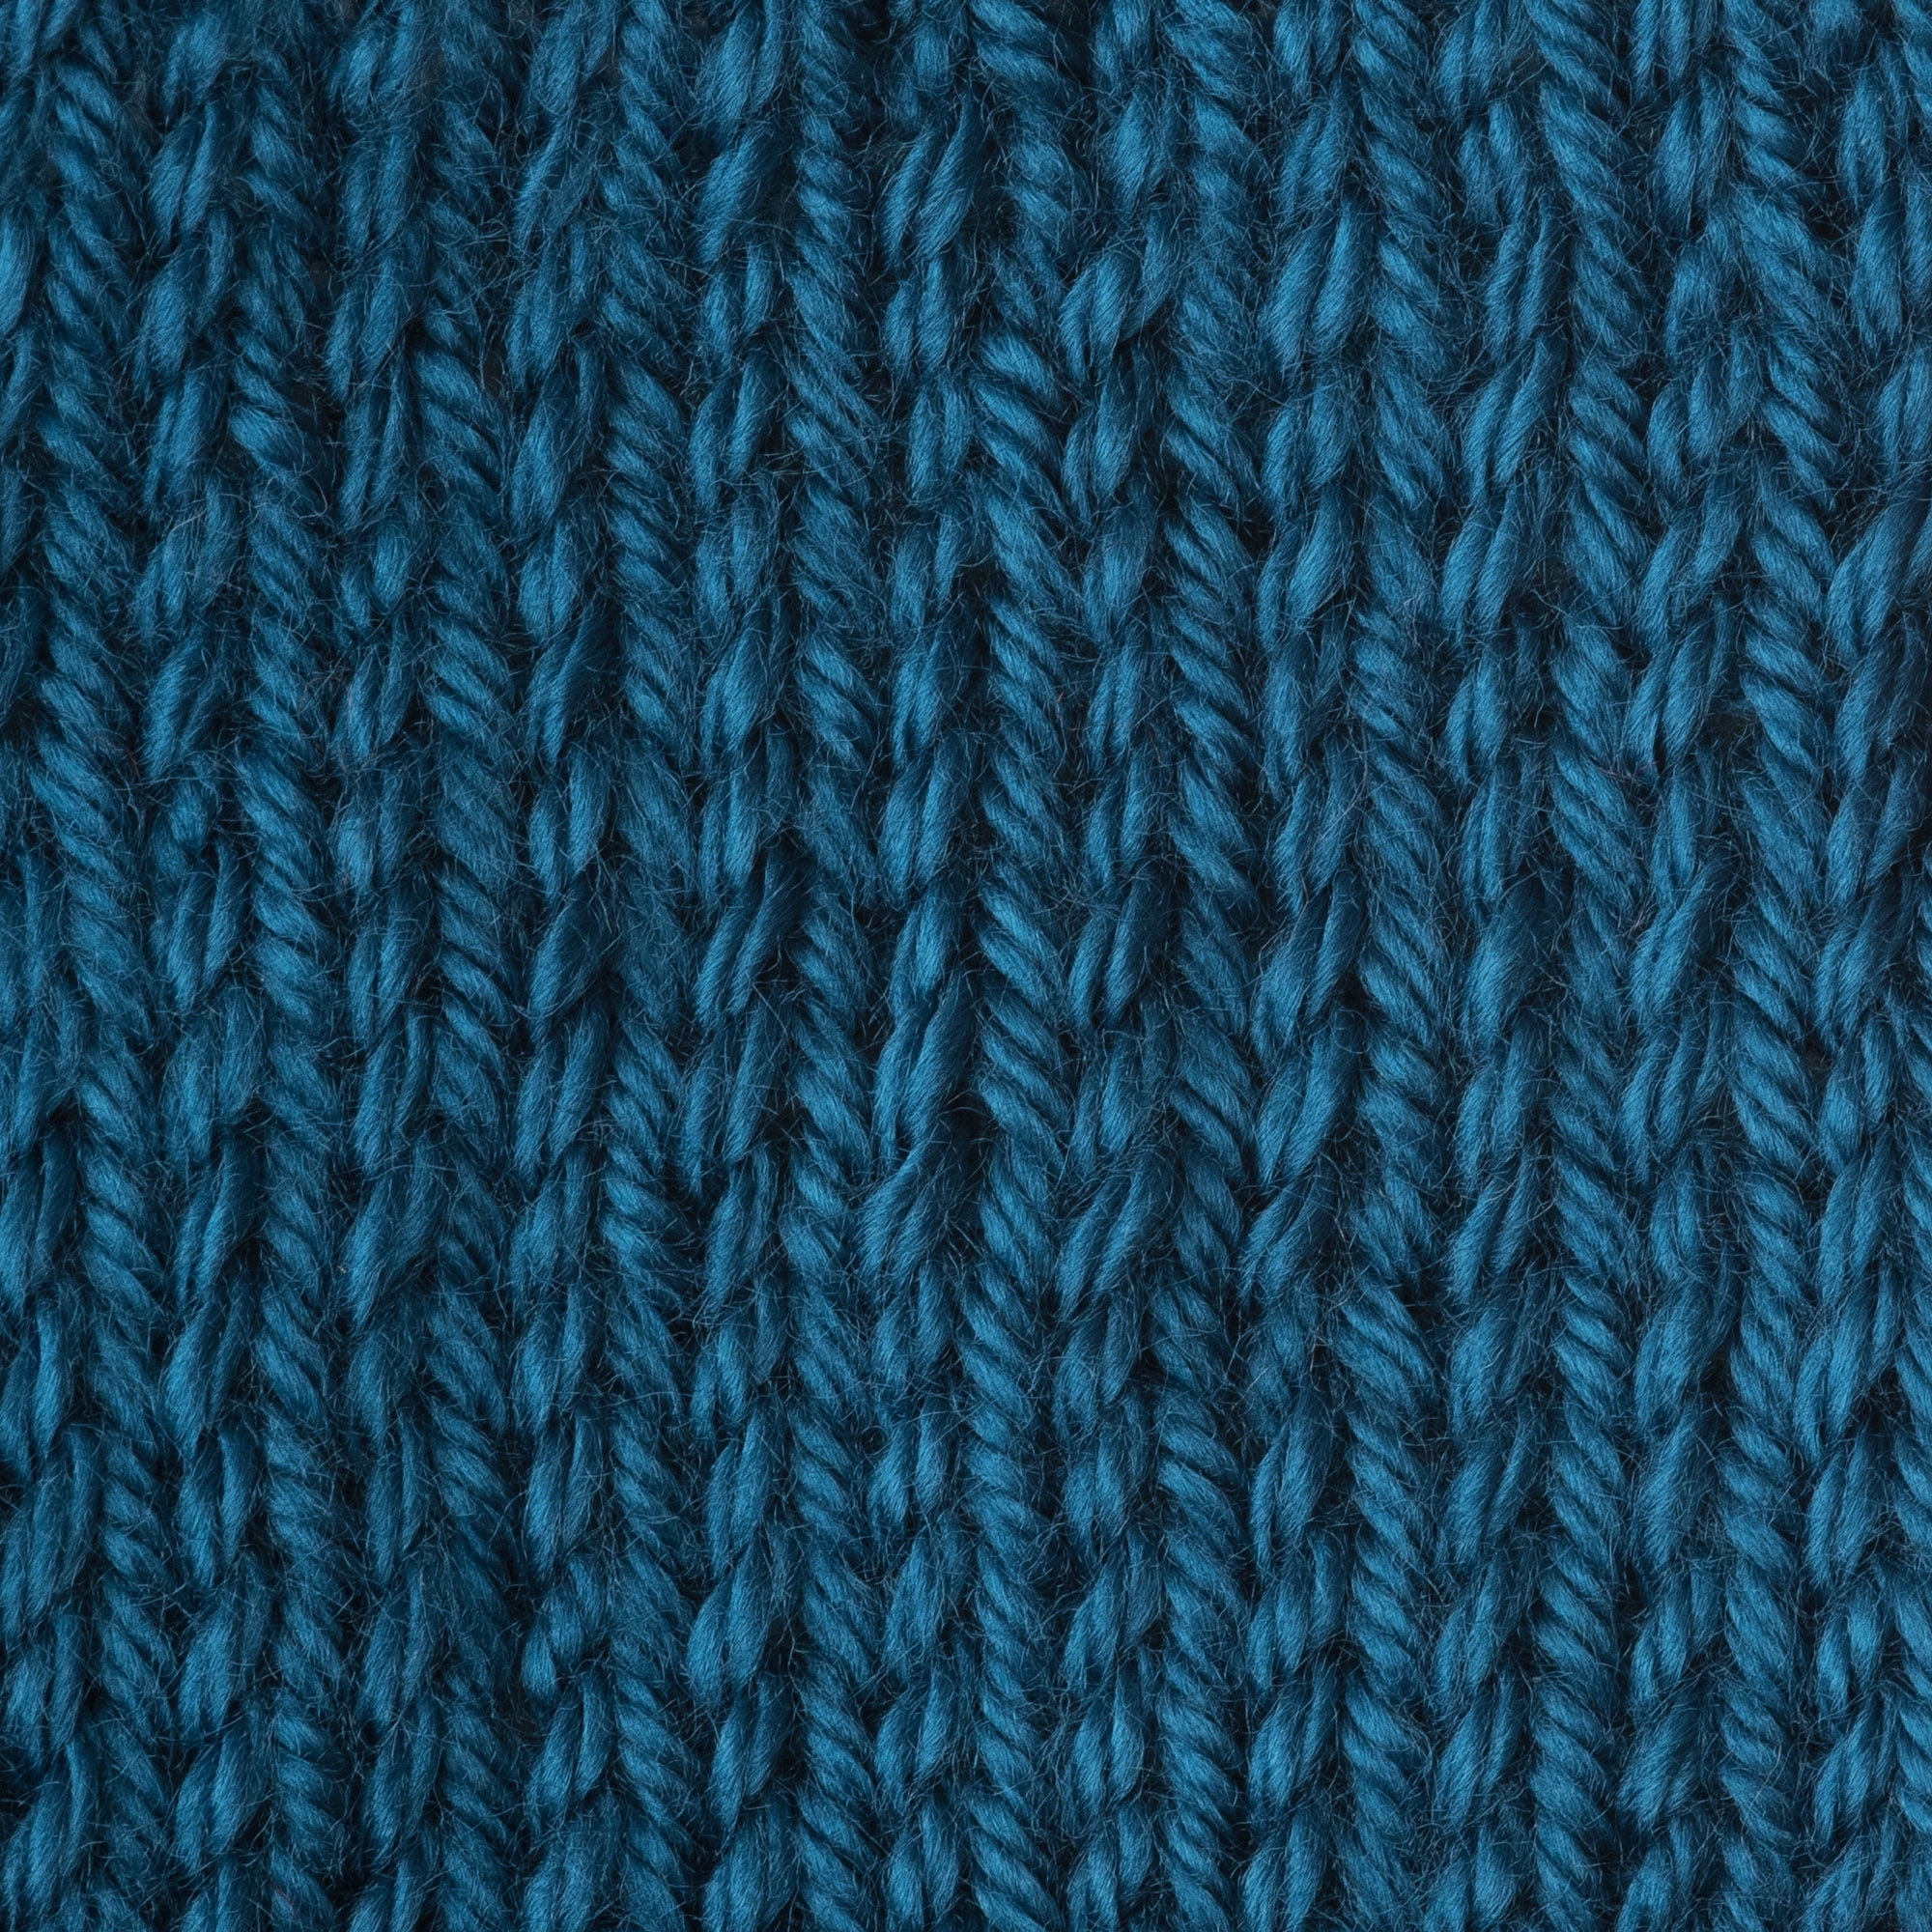 Yarn for Crocheting - Cotton Yarn for Crocheting Crafts and Beginner Yarn  -Crochet Yarn - Nylon & Cotton Yarn for Crocheting -Knitting Yarn-Worsted